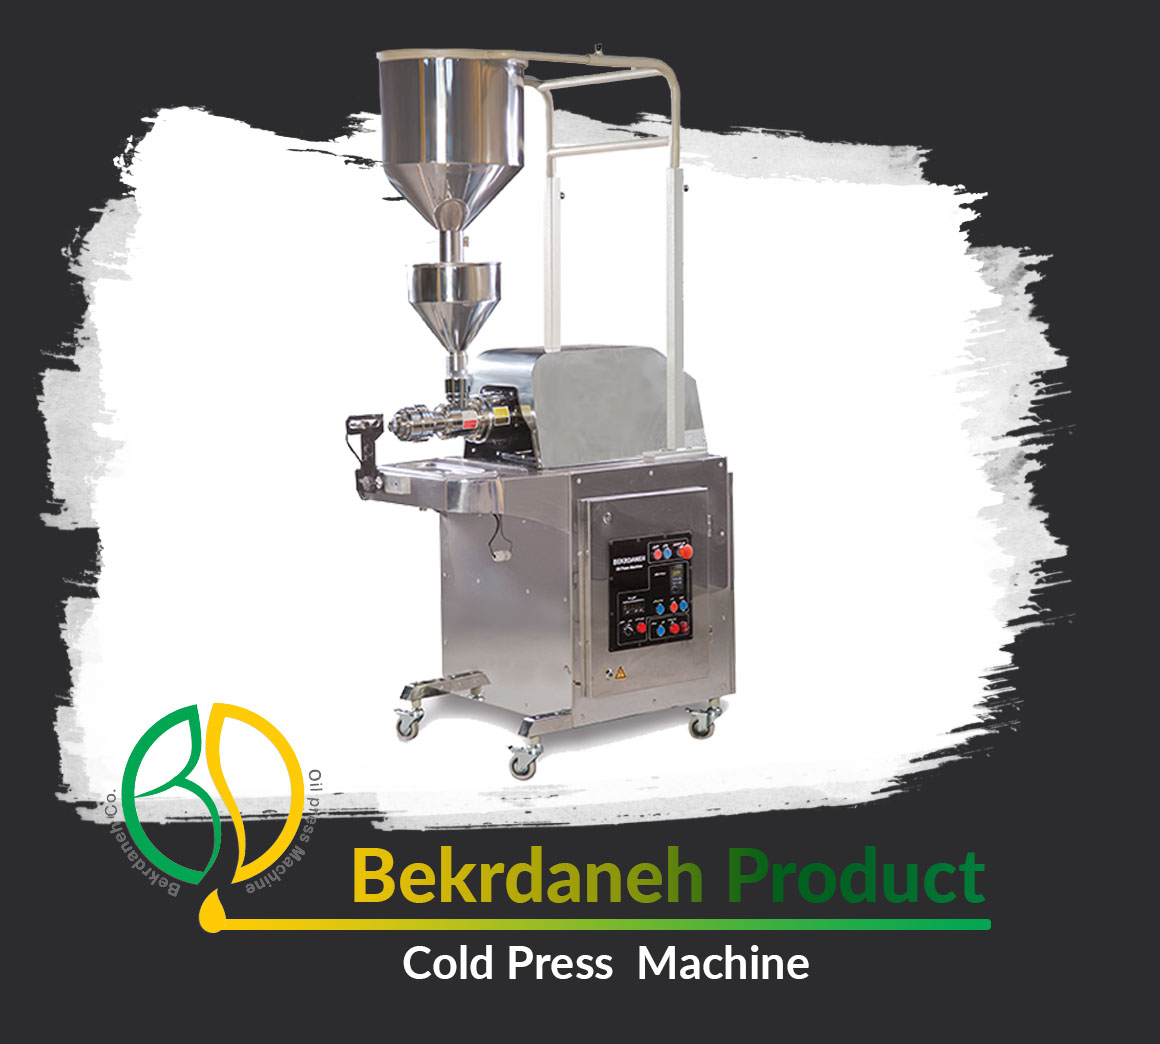 BD 85 Cold Press Machine